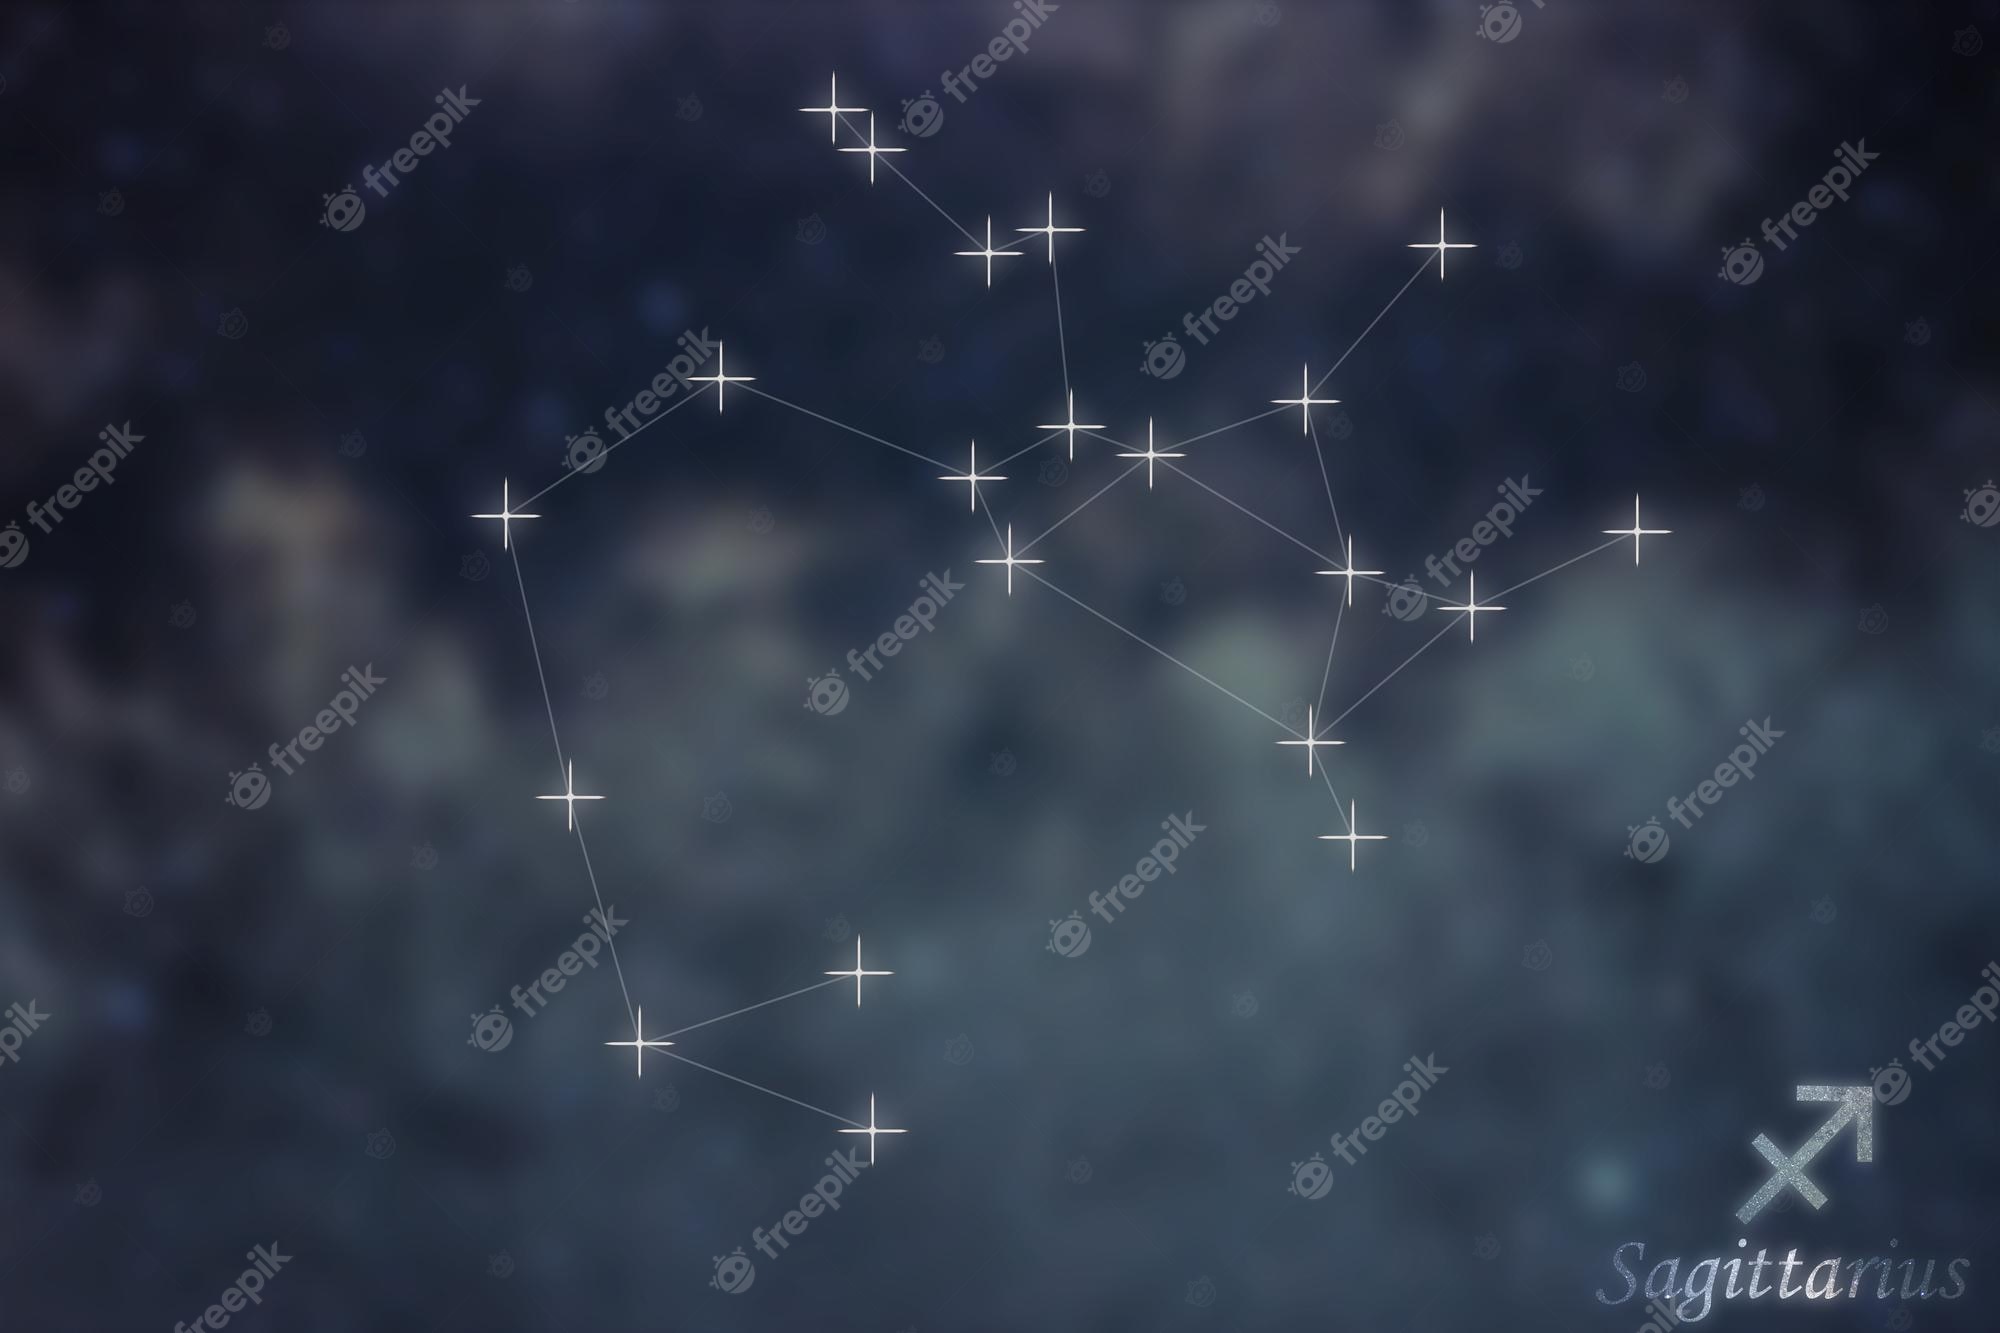 Premium Photo. Sagittarius constellation. zodiac sign sagittarius constellation lines galaxy background zodiac sign